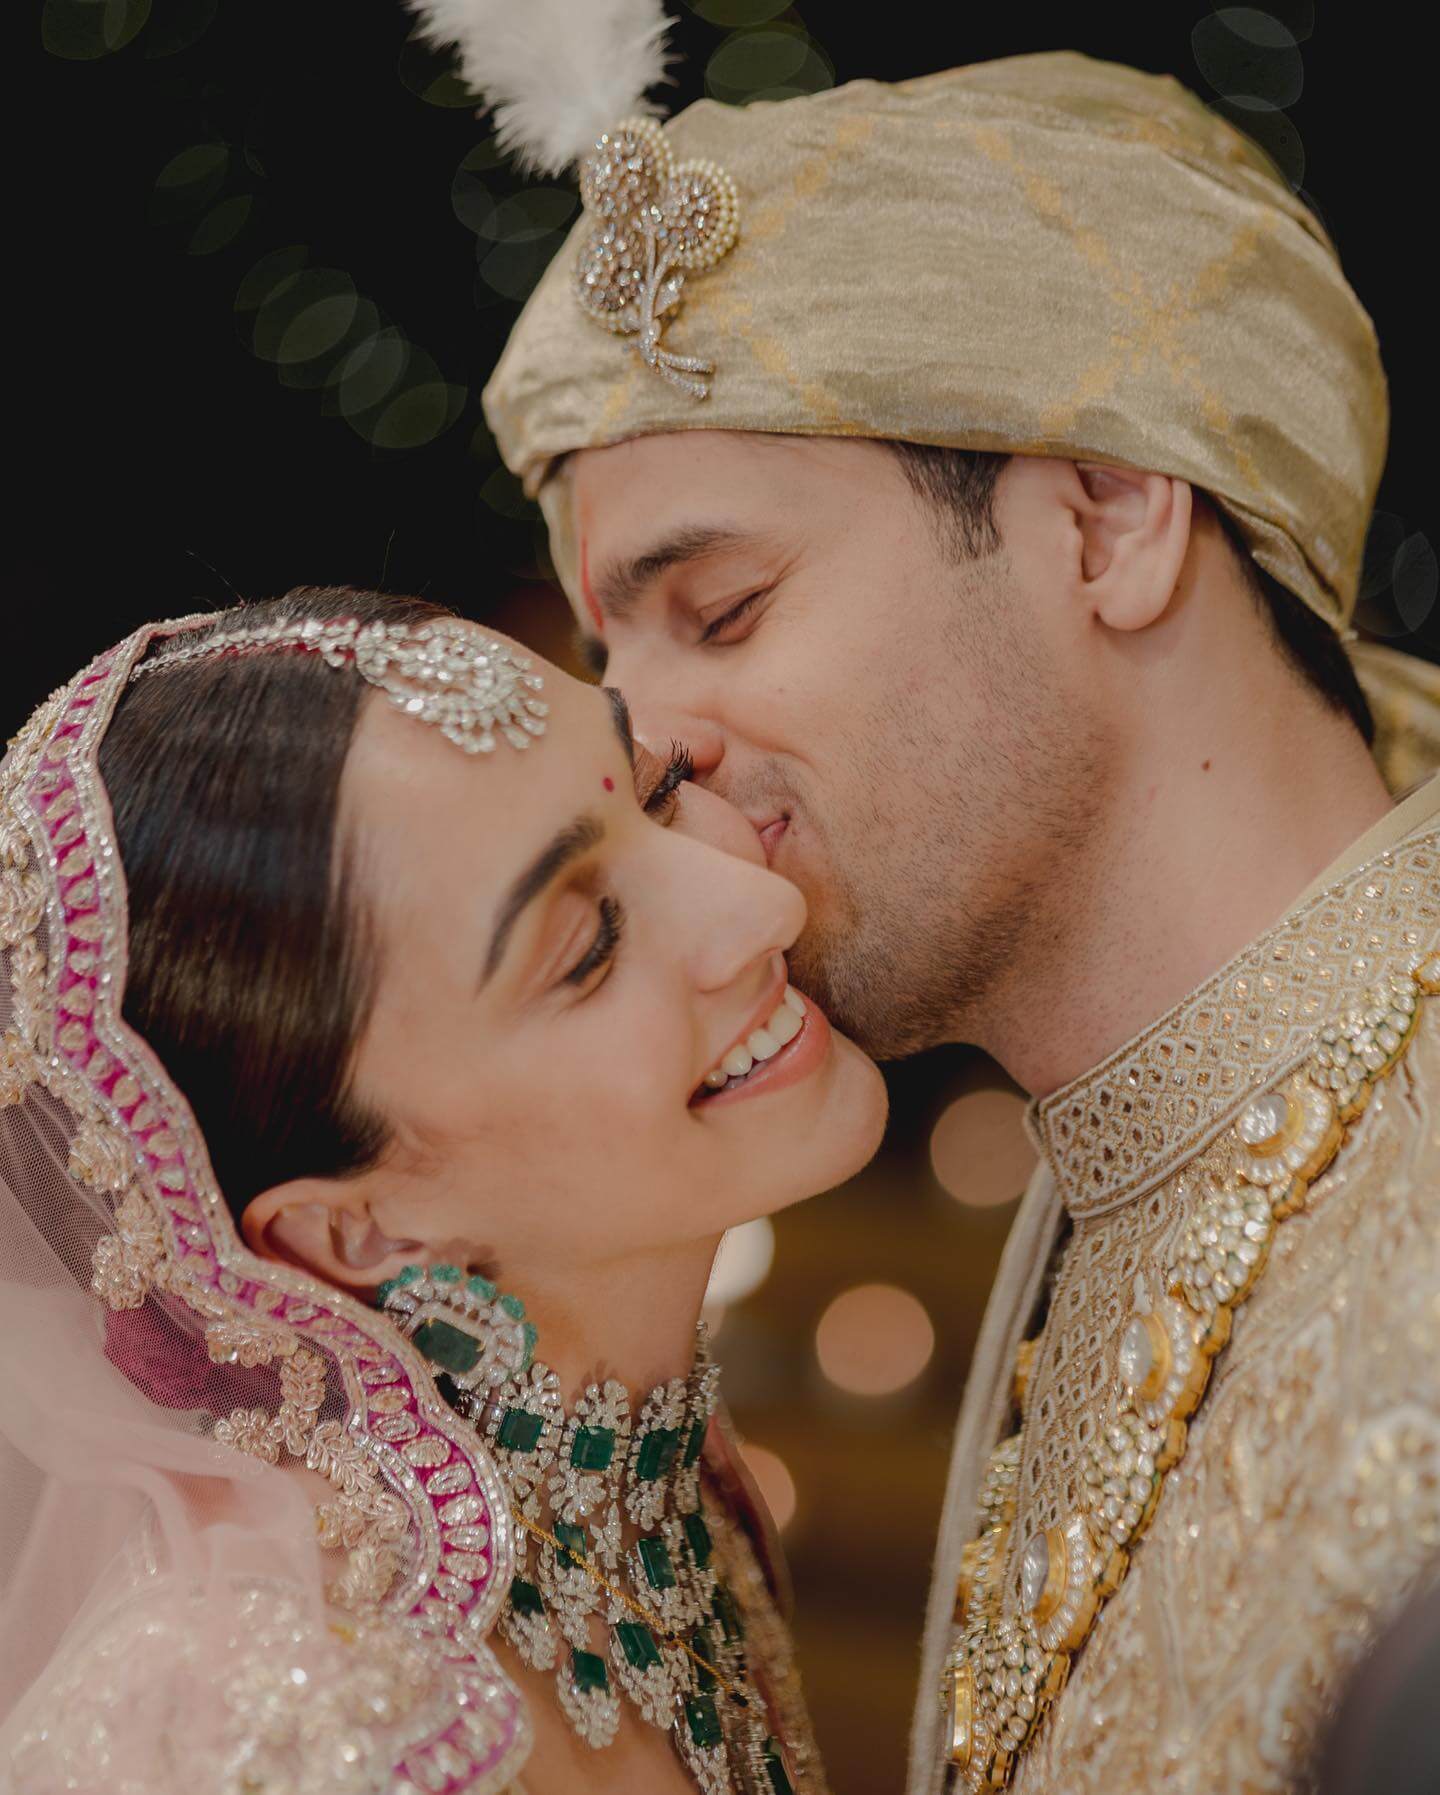 Kiara Advani and Sidharth Malhotra’s wedding pics